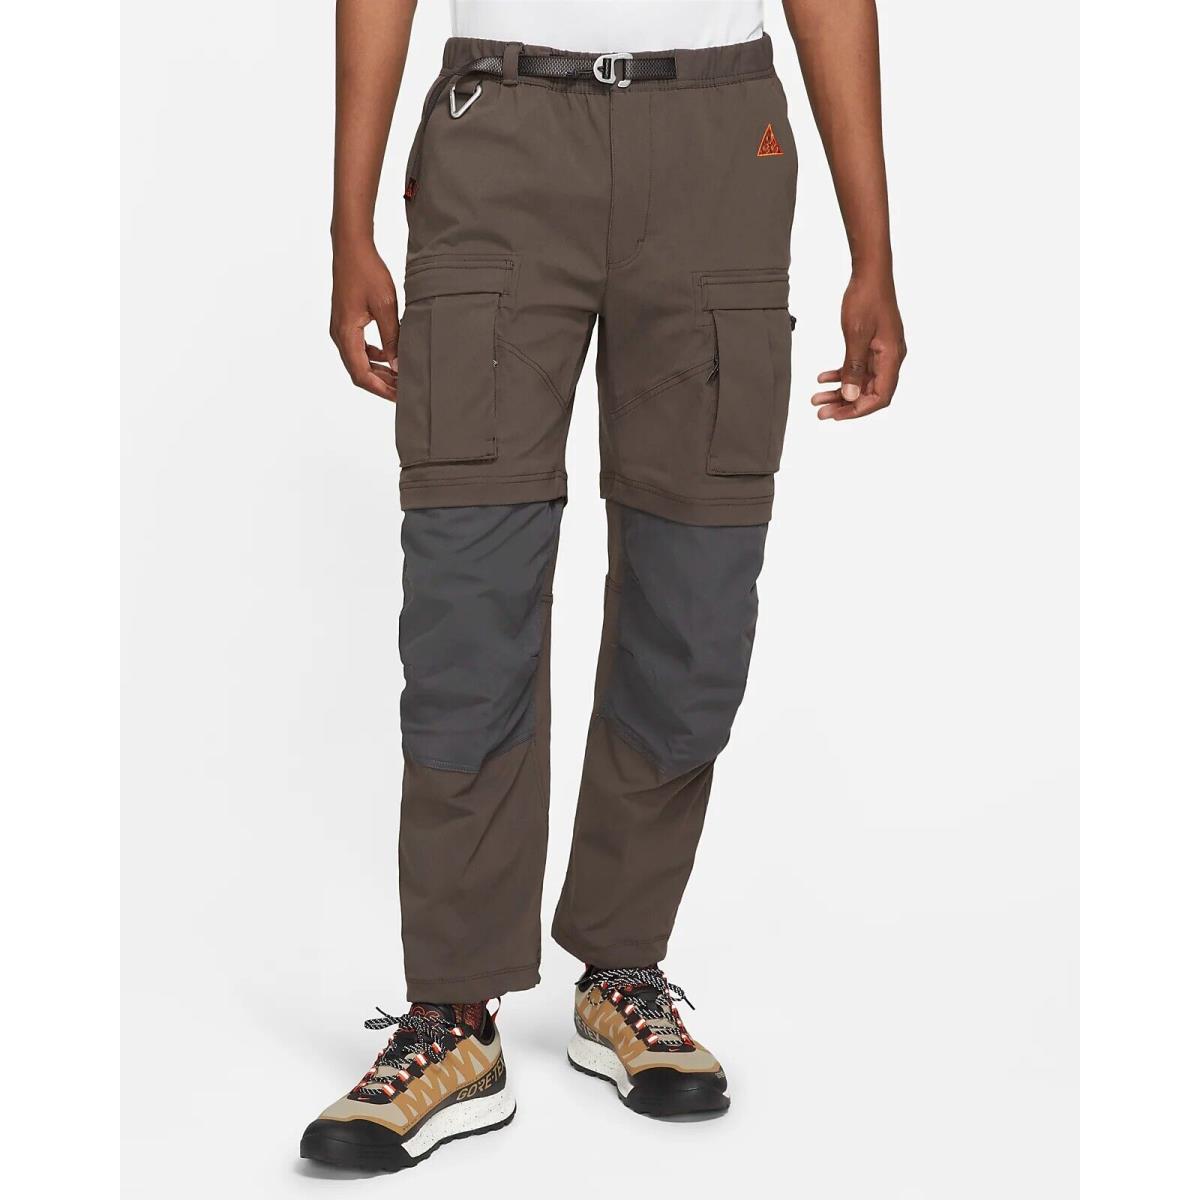 Nike Acg 2 in 1 Convertible Cargo Pants Shorts Brown Cactus CV0655-220 Men s L